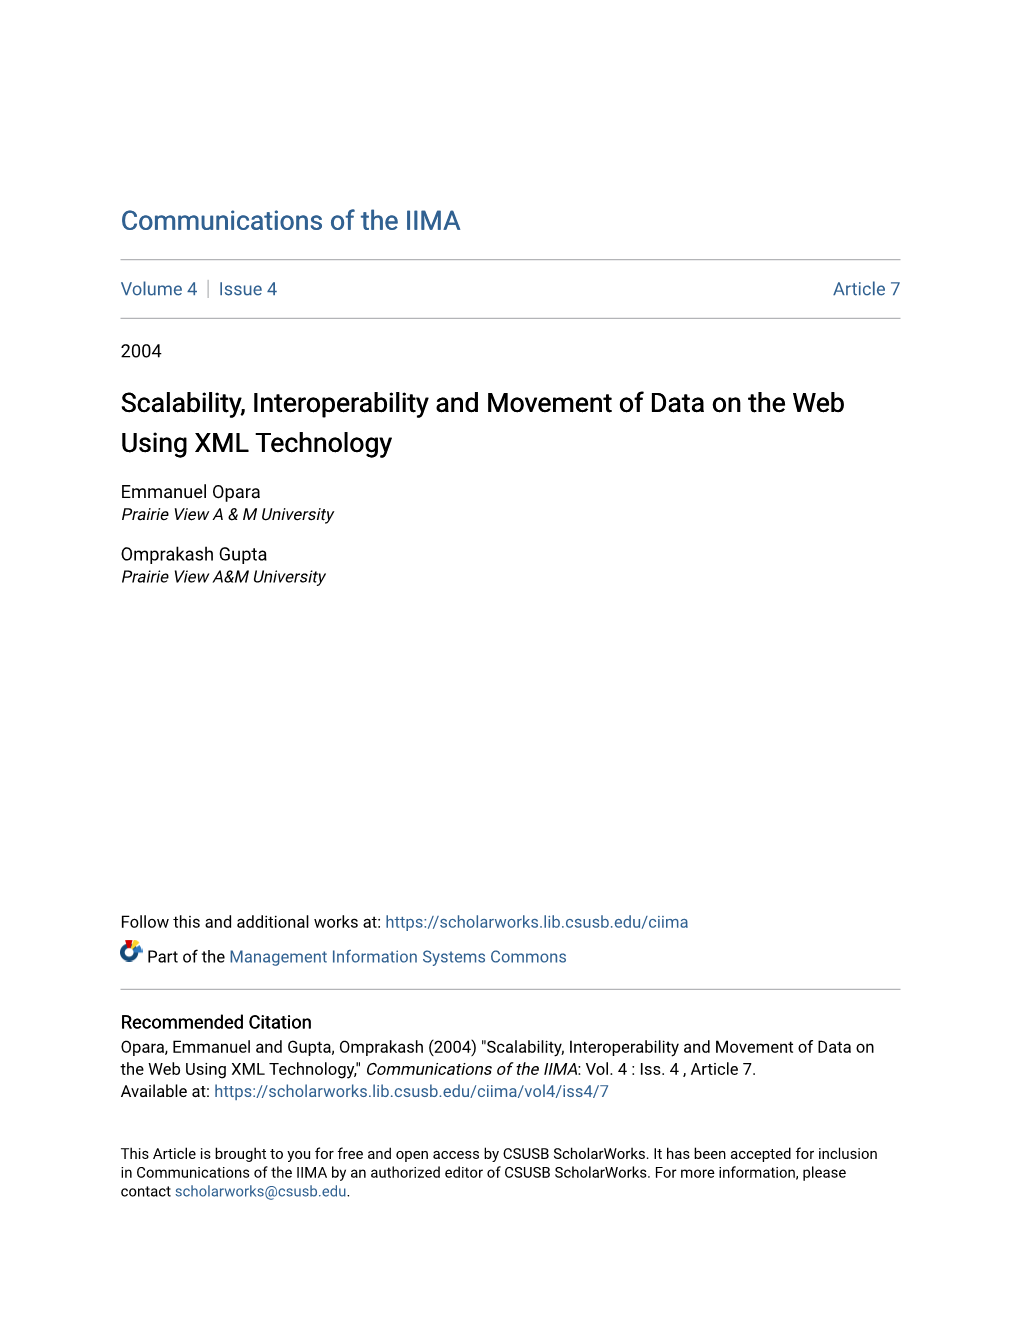 Scalability, Interoperability and Movement of Data on the Web Using XML Technology